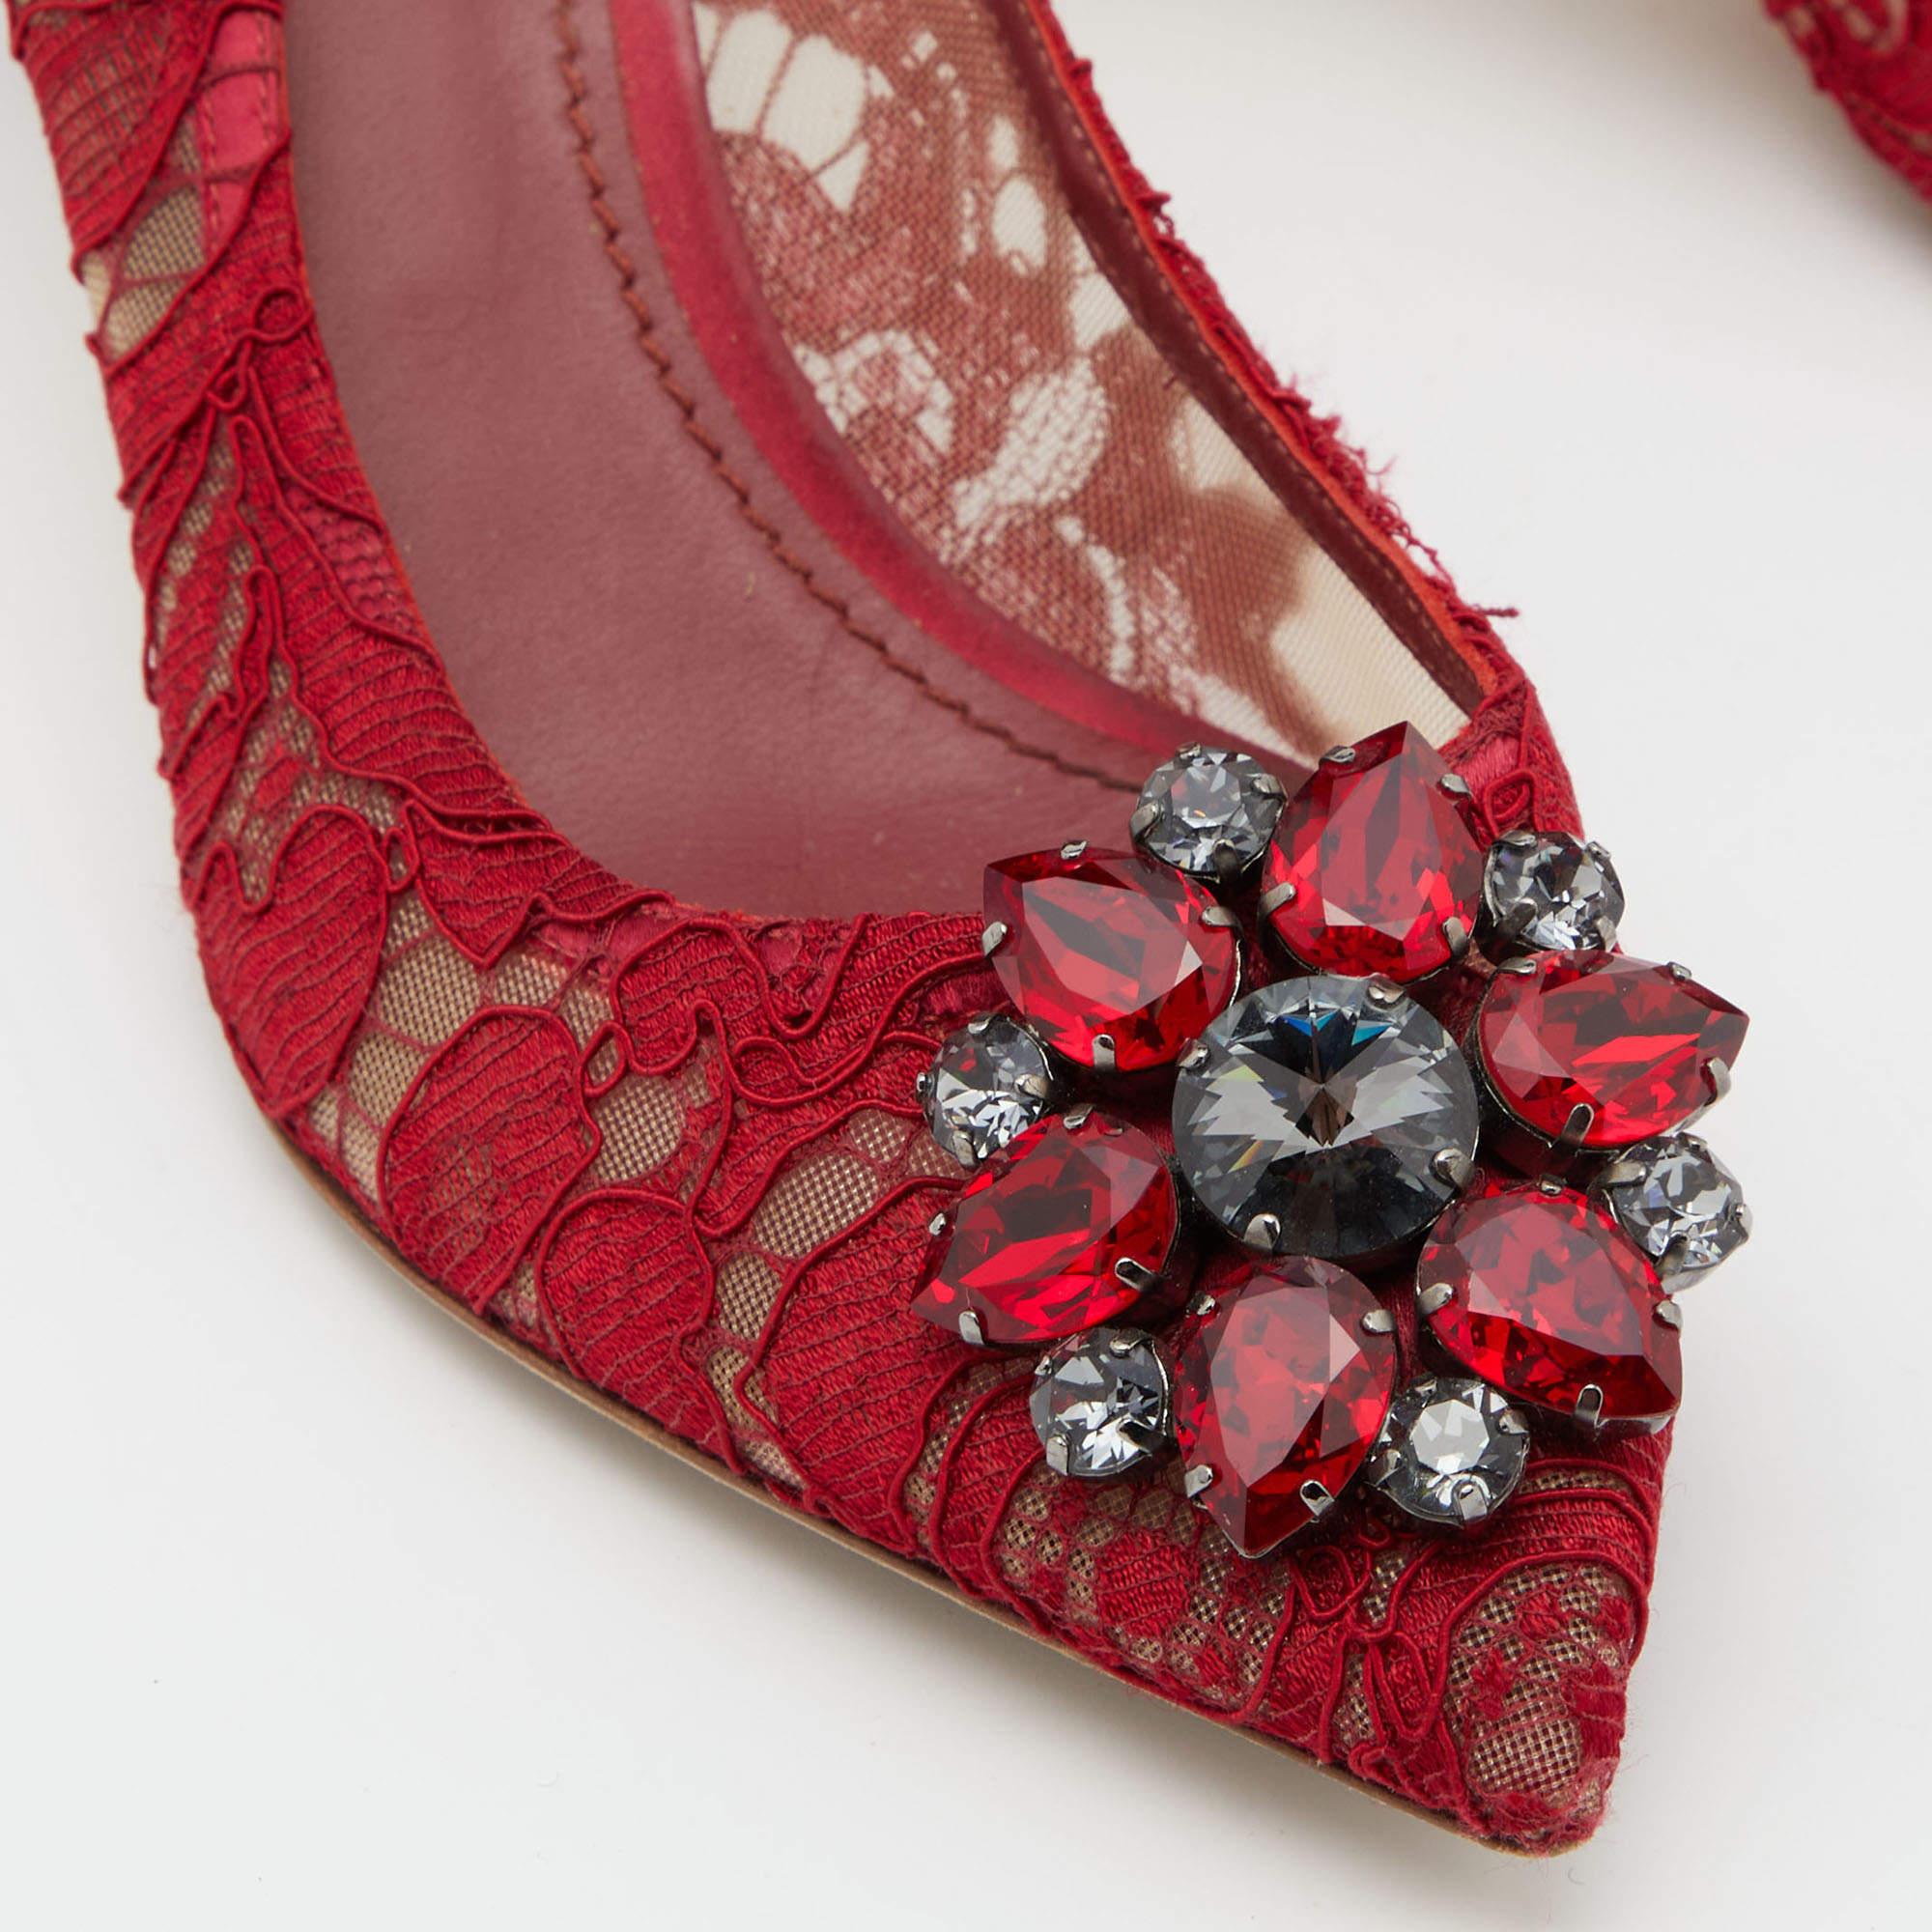 Dolce & Gabbana Red Lace Bellucci Pumps Size 37.5 2